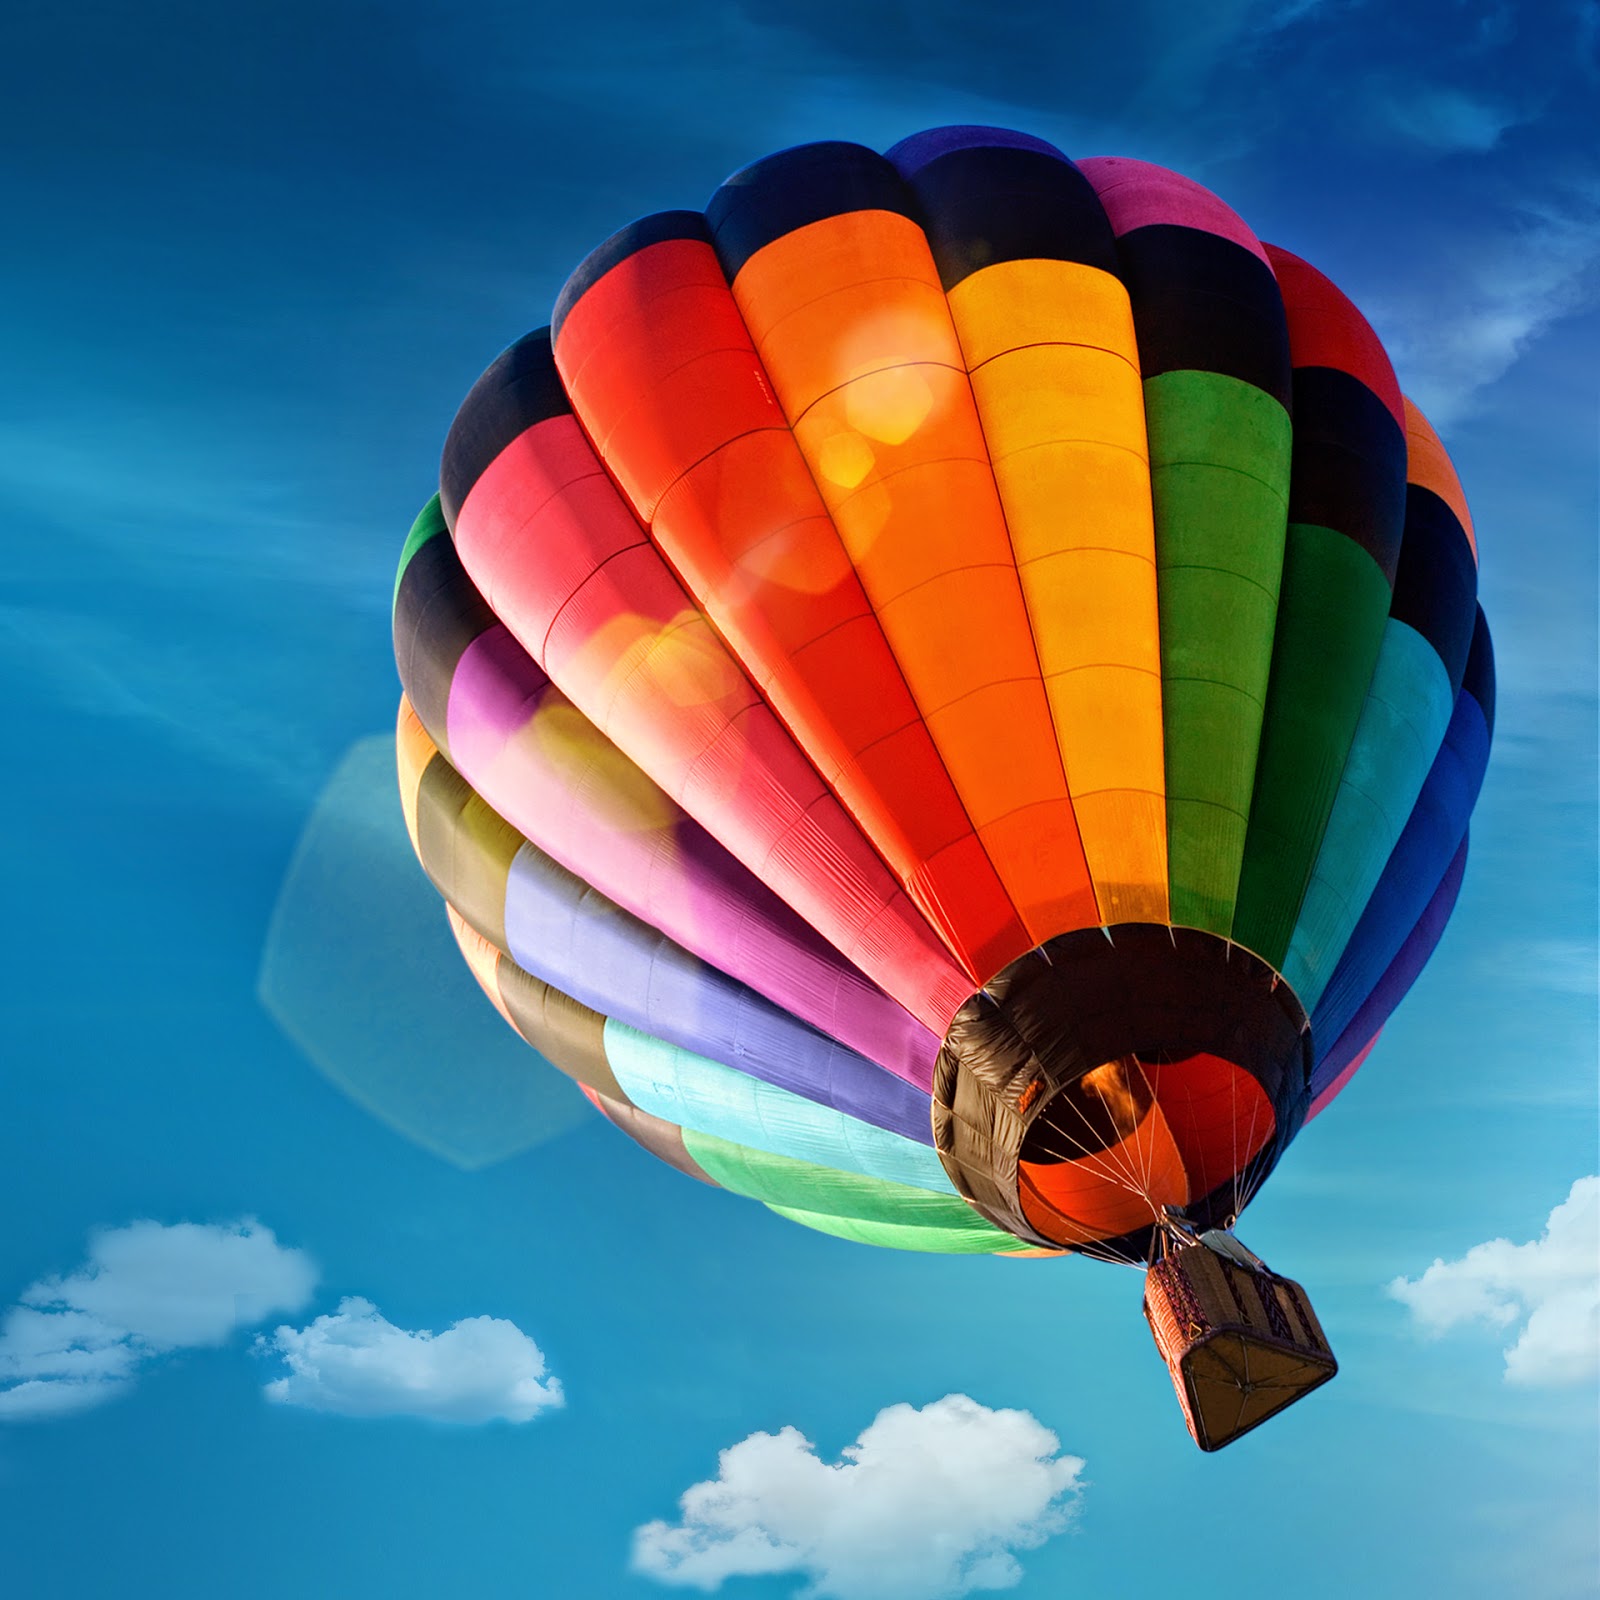 s4ライブ壁紙,熱気球,熱気球,空,車両,雰囲気